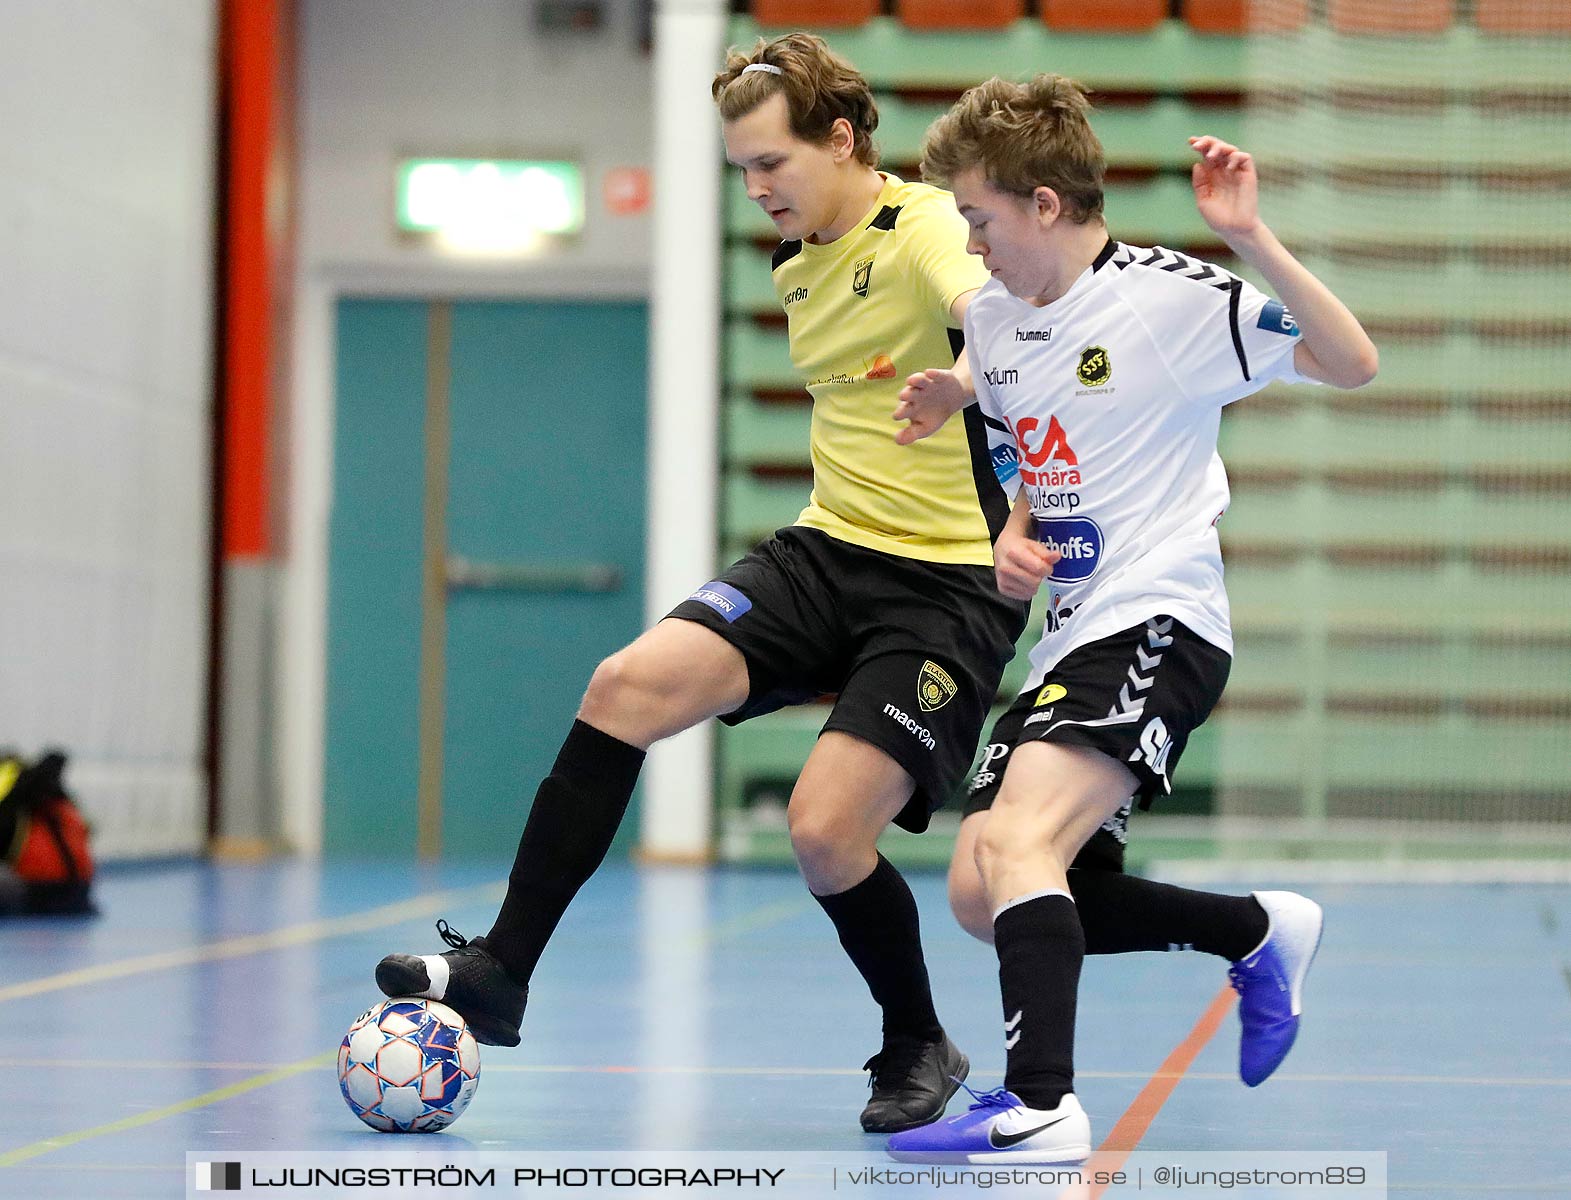 Skövde Futsalcup 2019 Herrar Elastico Futsal Club-Skultorps IF,herr,Arena Skövde,Skövde,Sverige,Futsal,,2019,227379